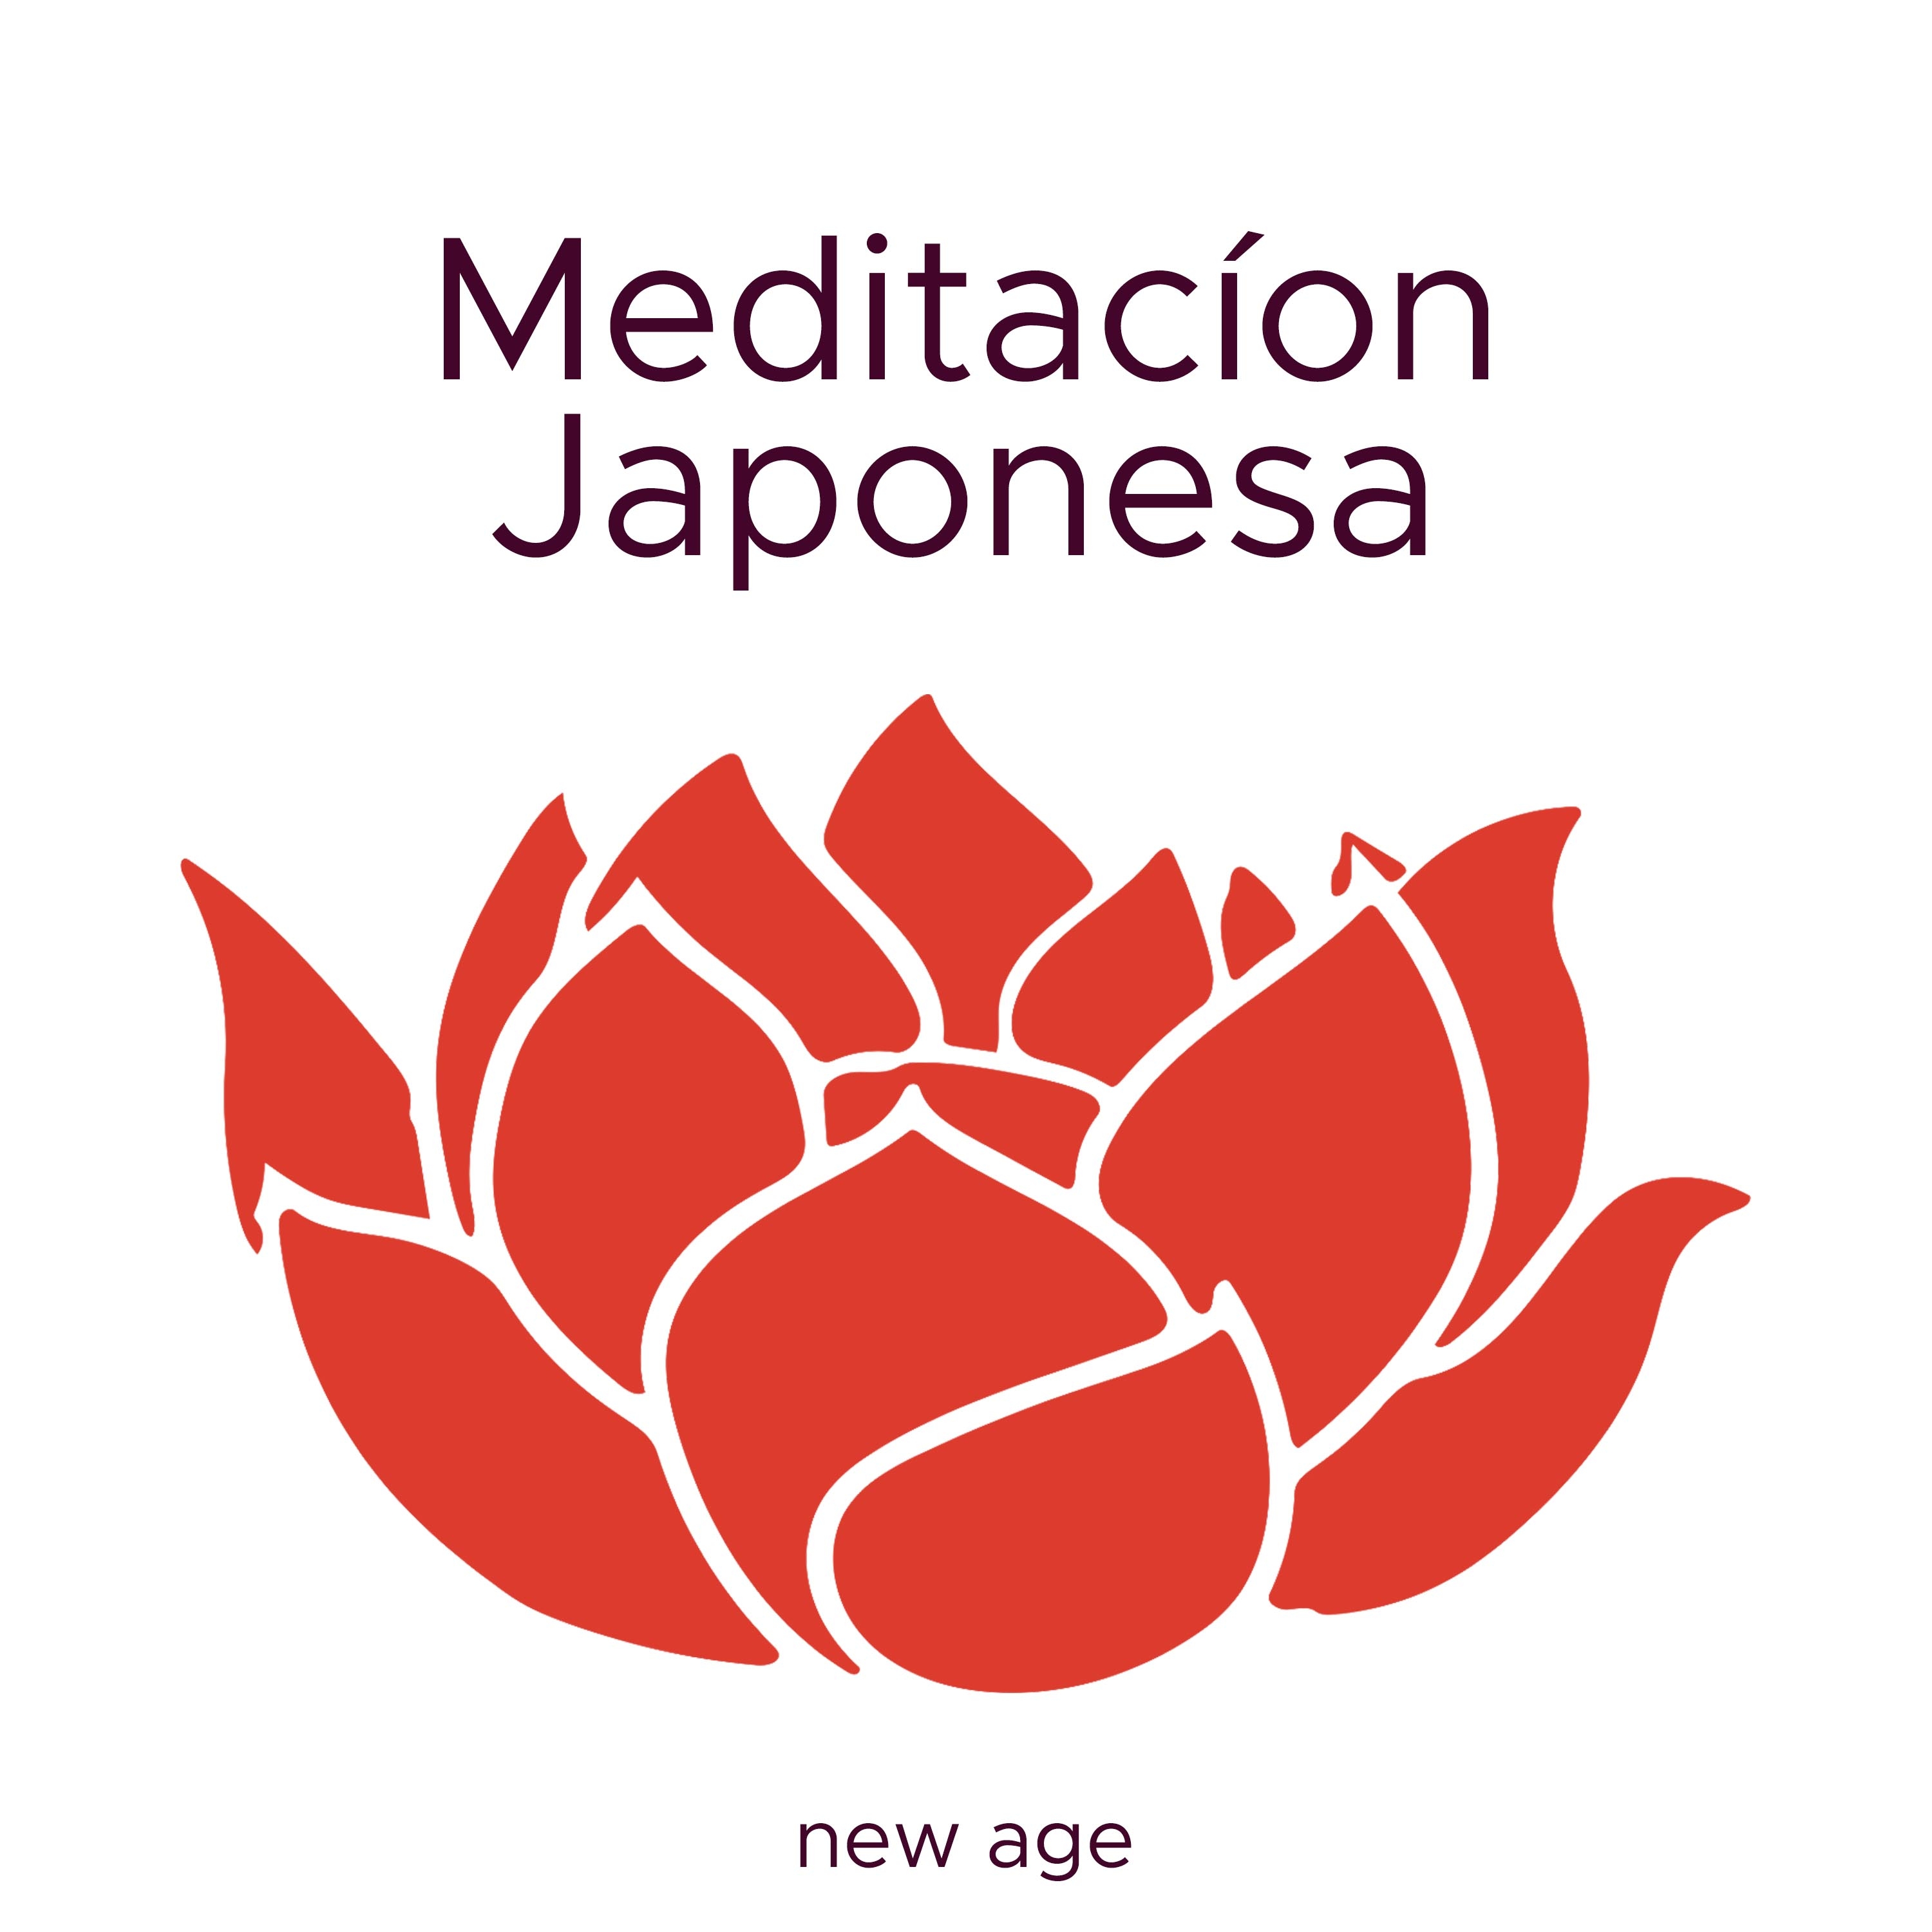 Budismo y Meditacio n Mindfulness